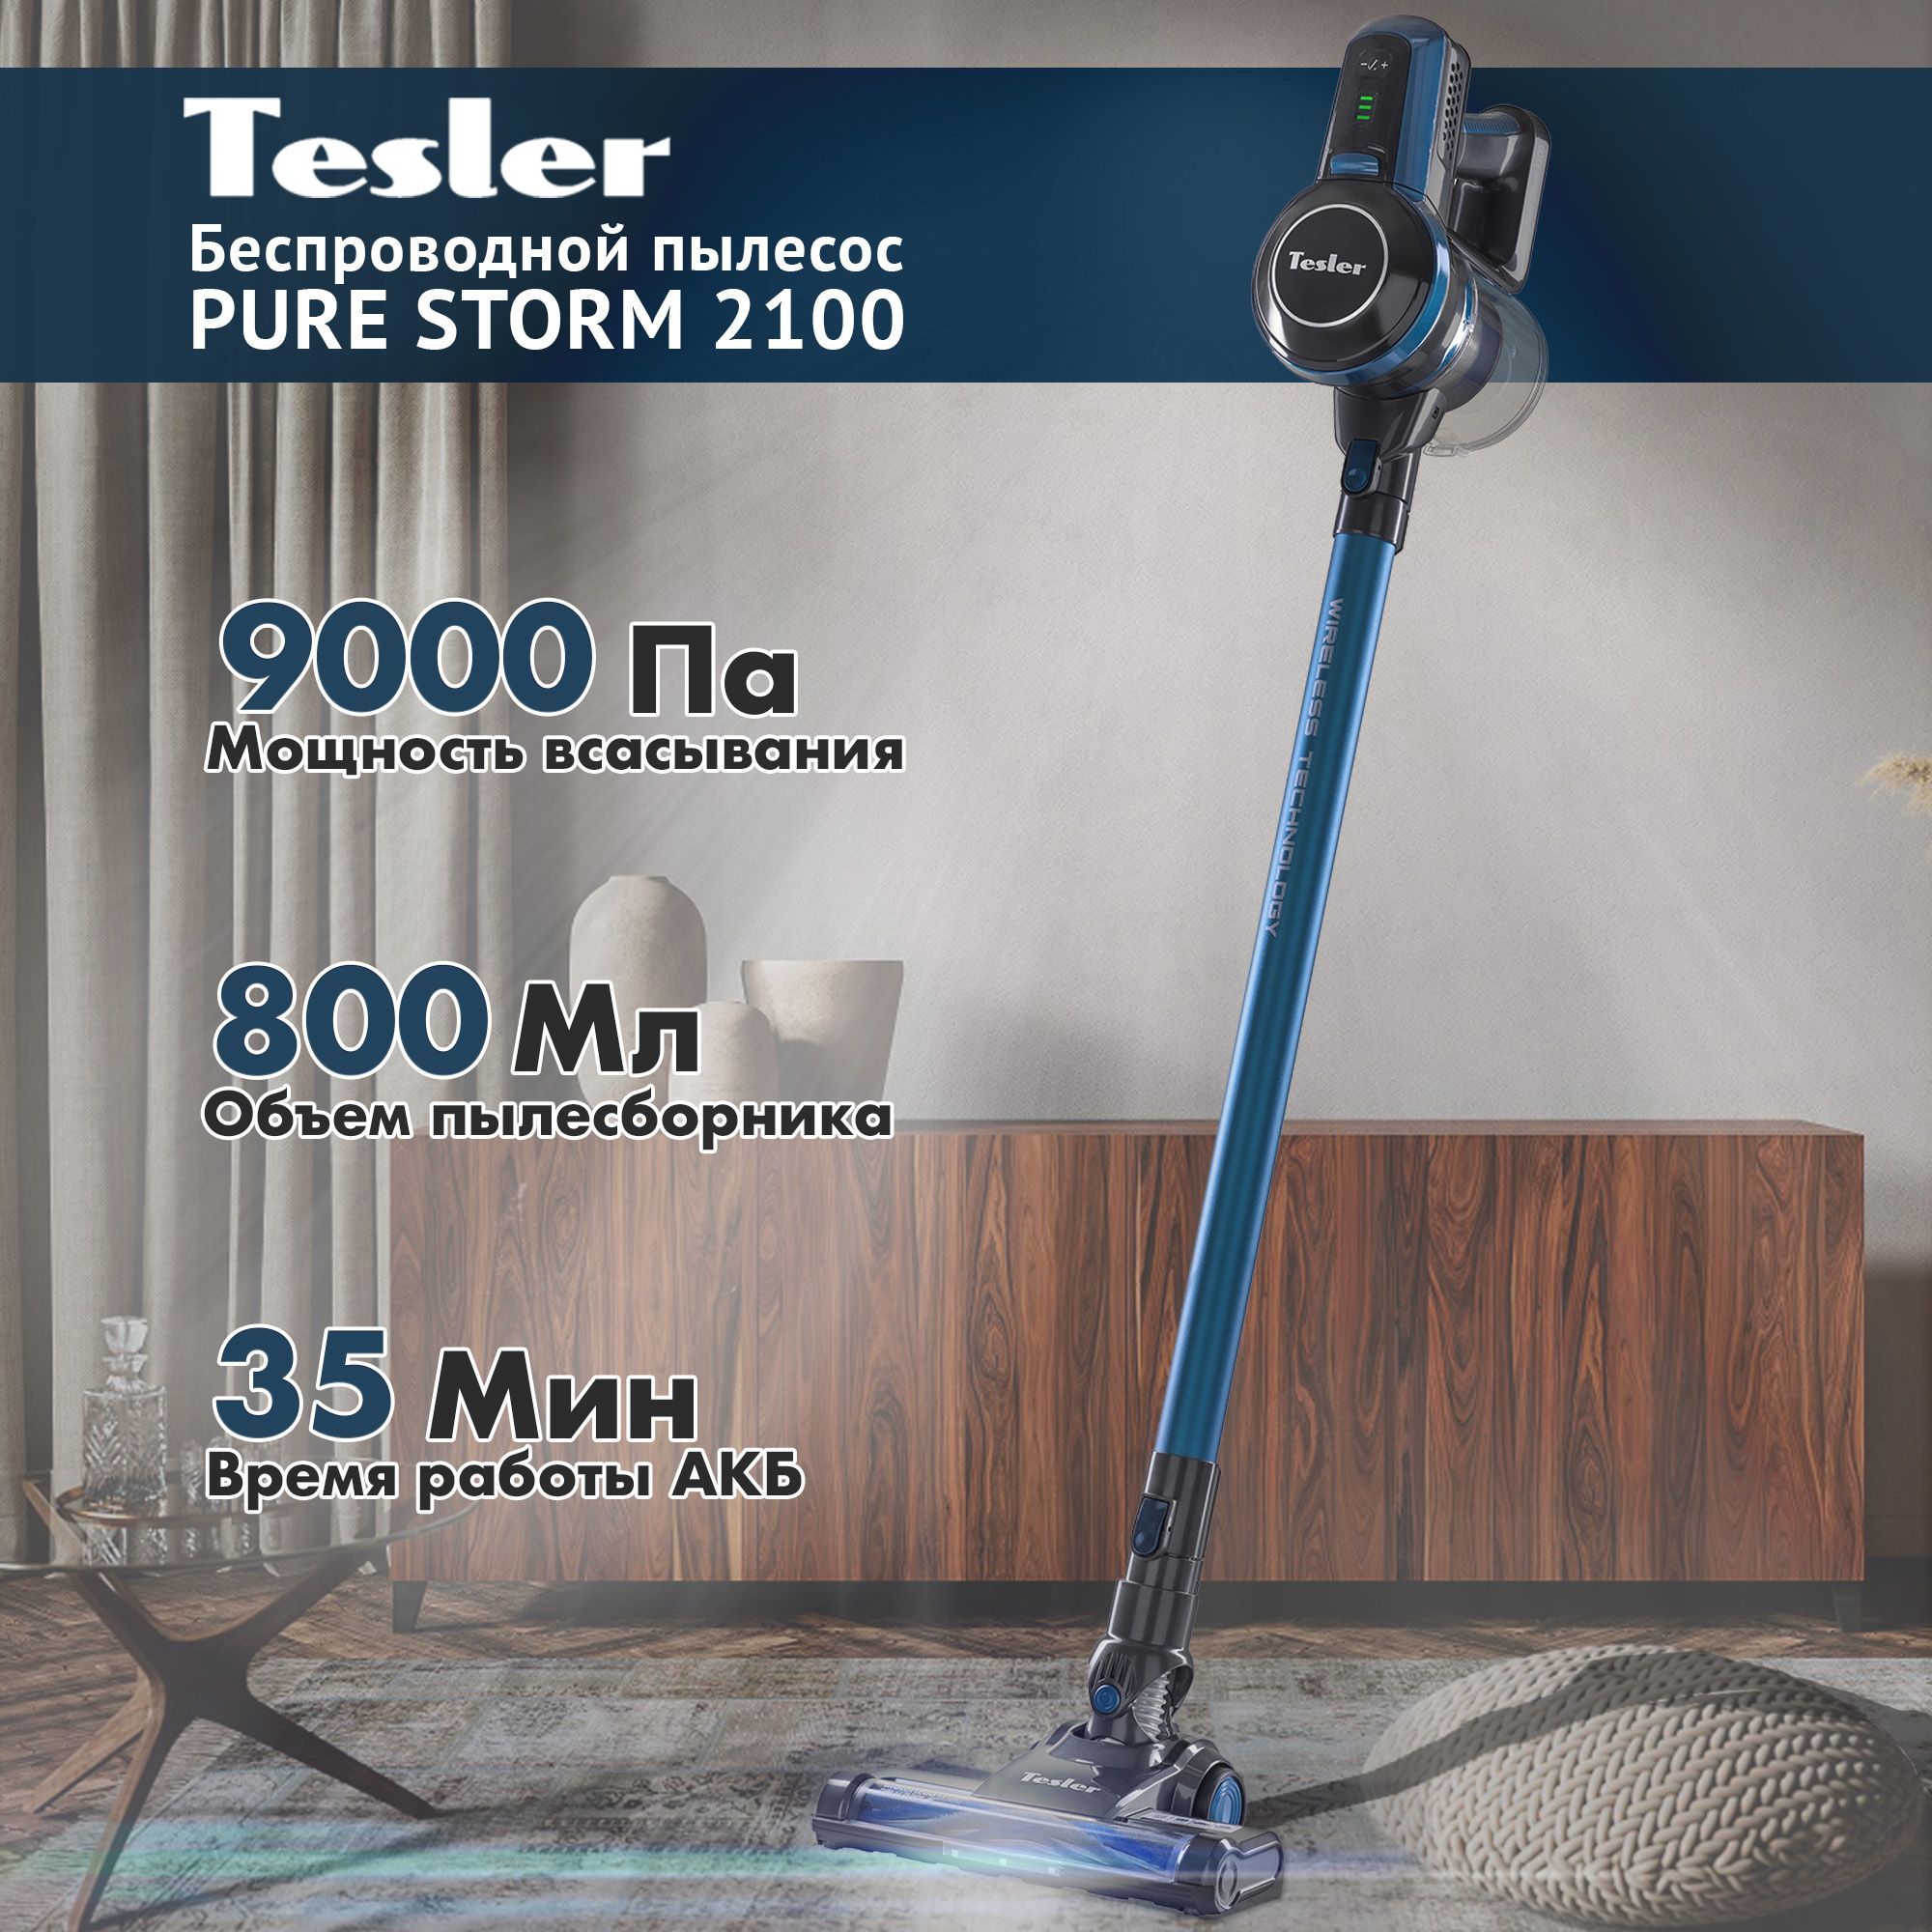 Tesler Pure Storm 2100